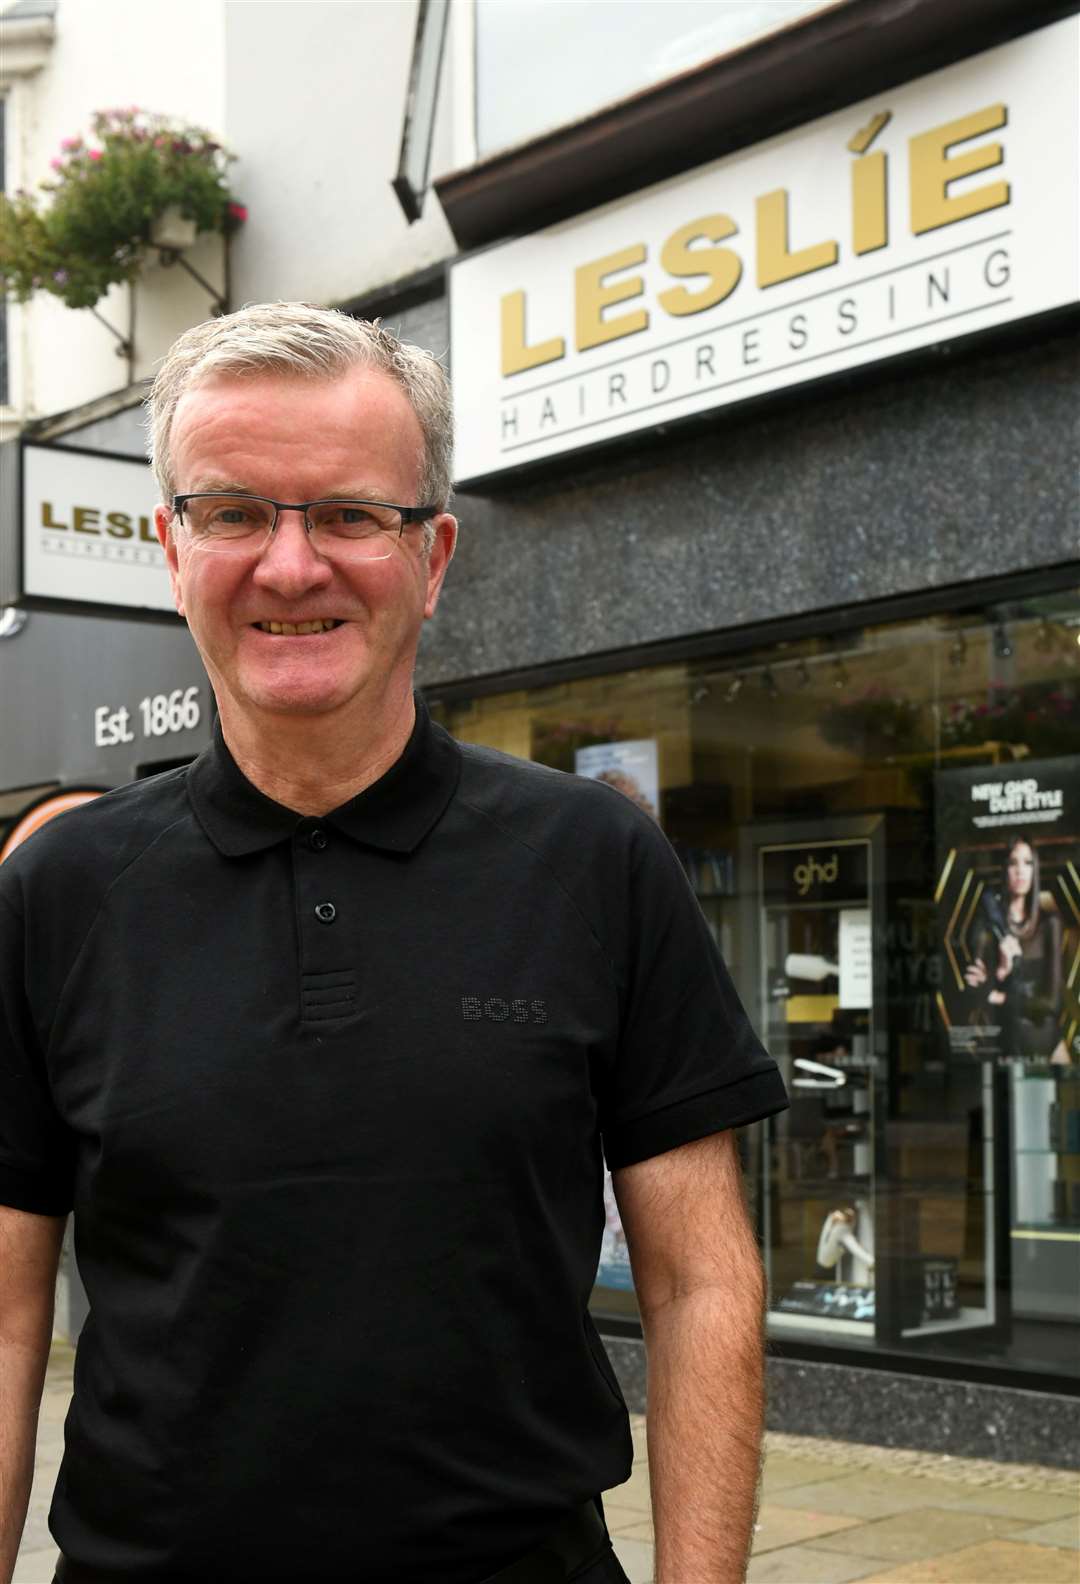 Graeme Thomson, owner of Leslie Hairdressing. Picture: James Mackenzie